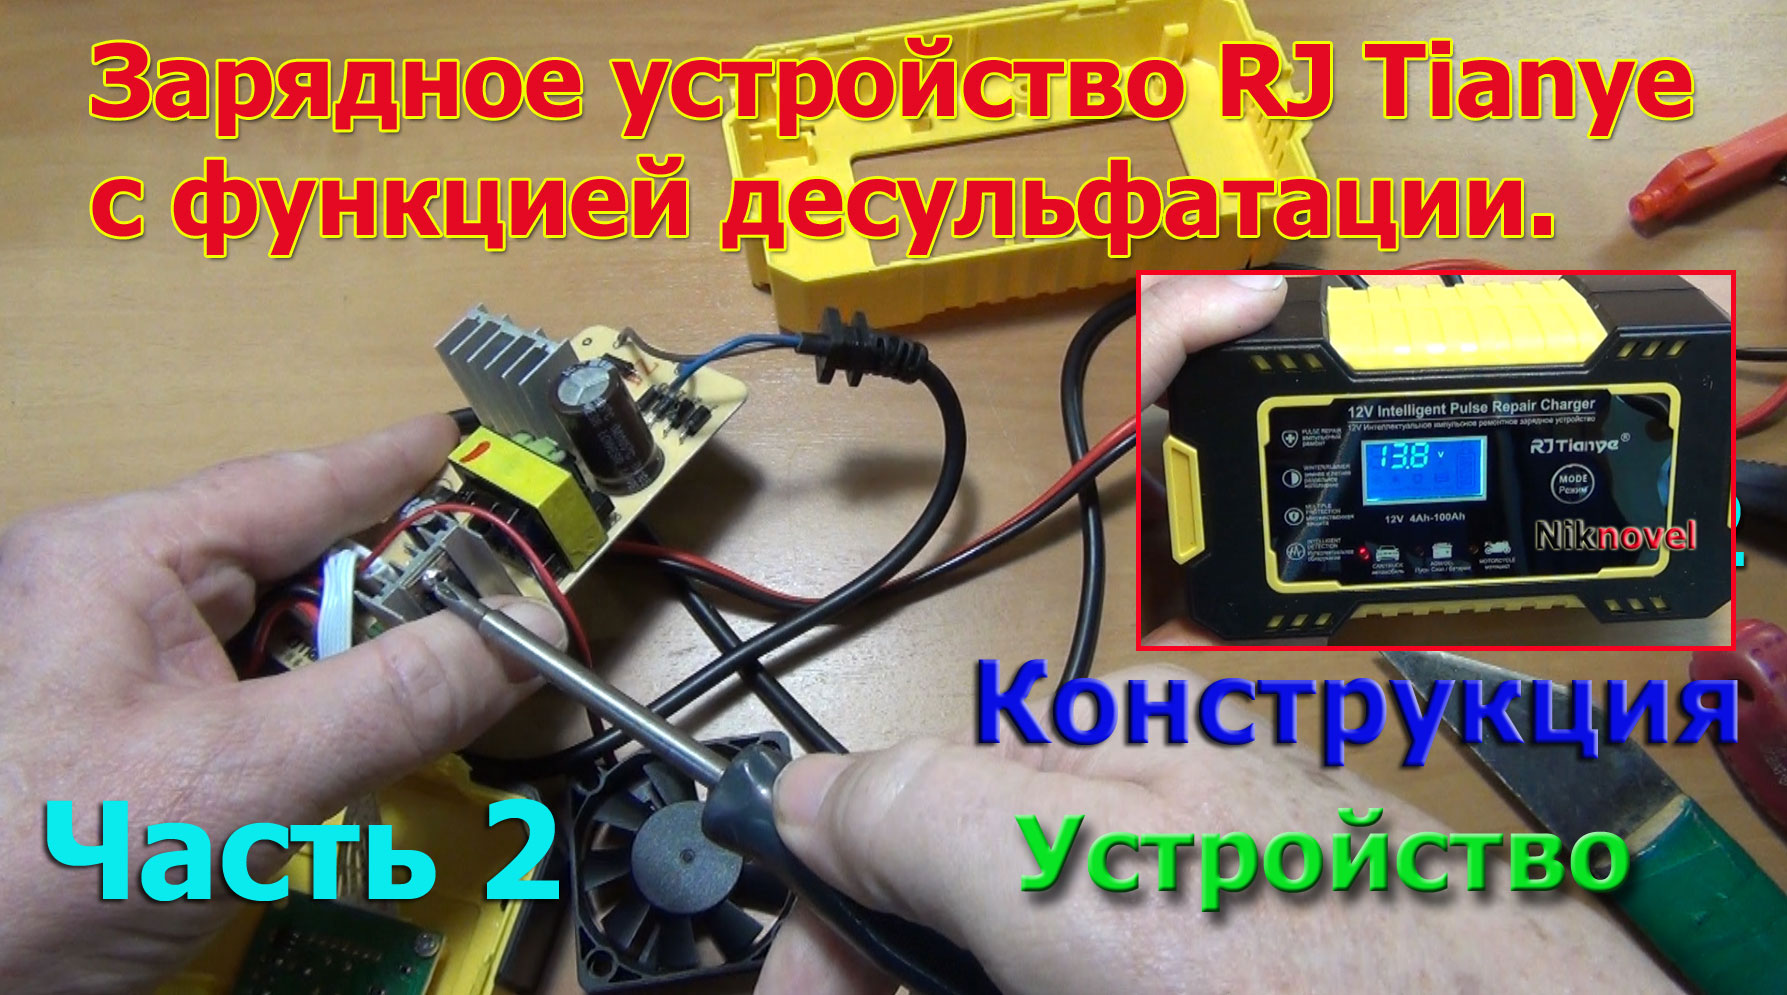 Зарядное устройство RJ Tianye для автомобильного аккумулятора. Разборка и устройство. Часть 2.